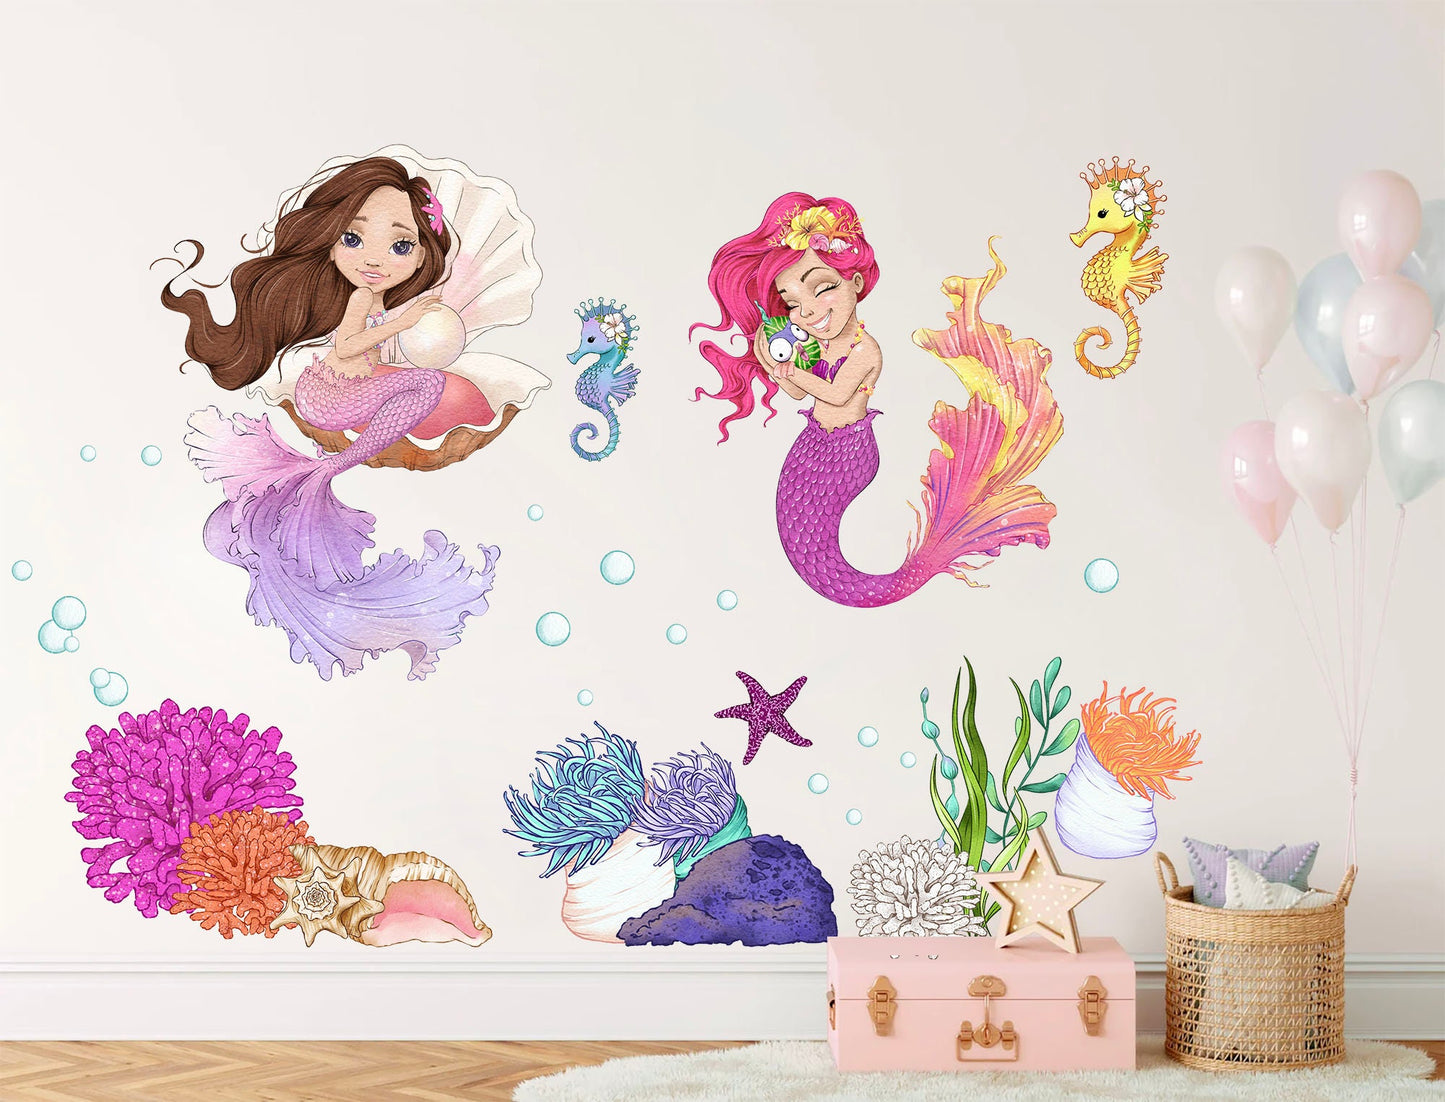 Whimsical Undersea Mermaid Princess Wall Art - Charming Mermaid, Seahorses & Ocean Life - Enhance Your Girl's Room Decor - BR189